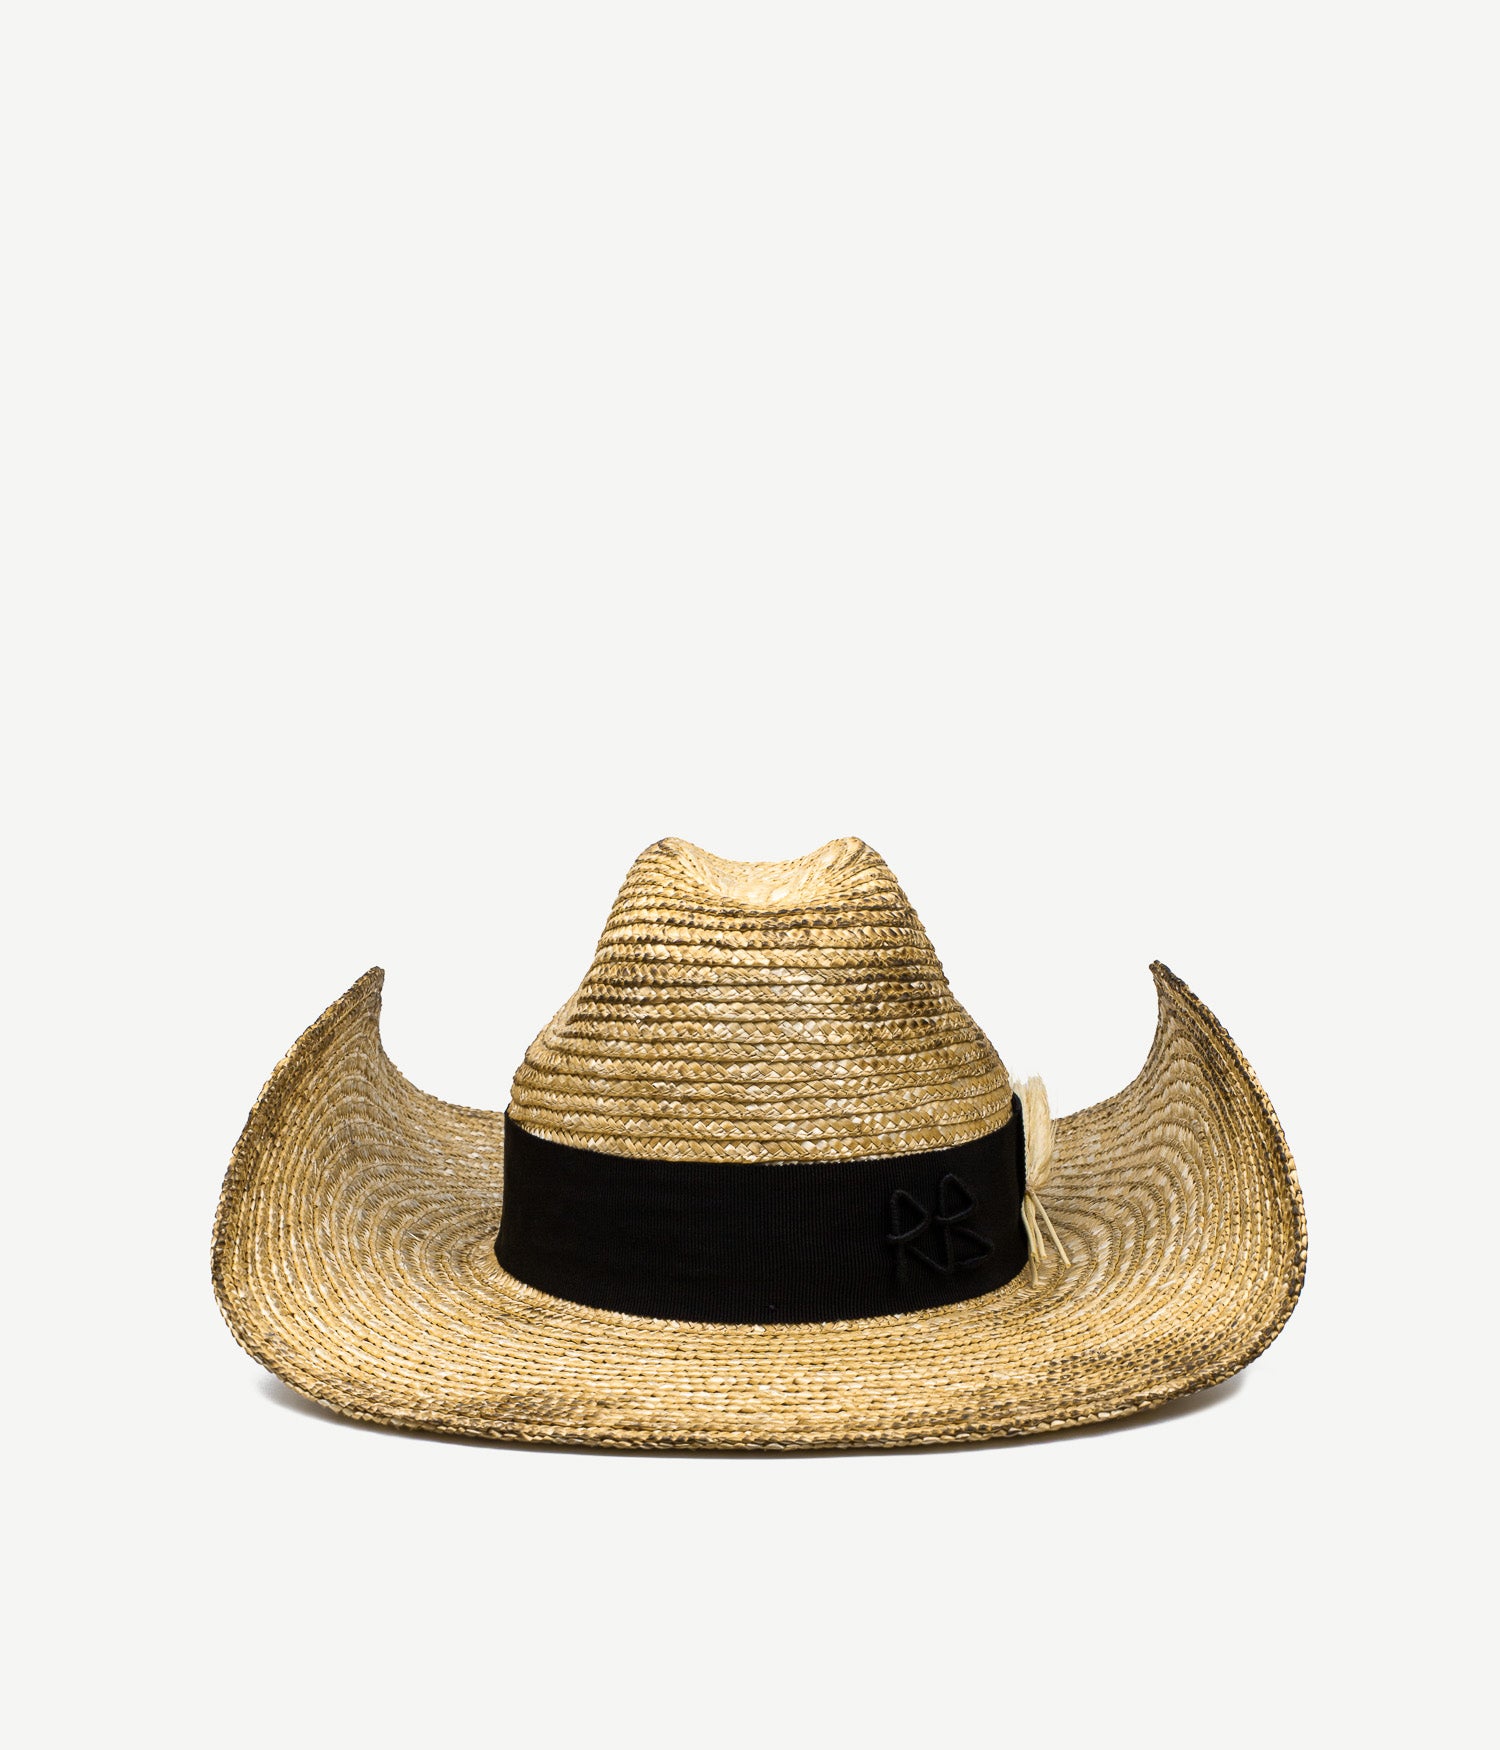 Wheat Spikes Embellished "Sunburnt" Cowboy Hat